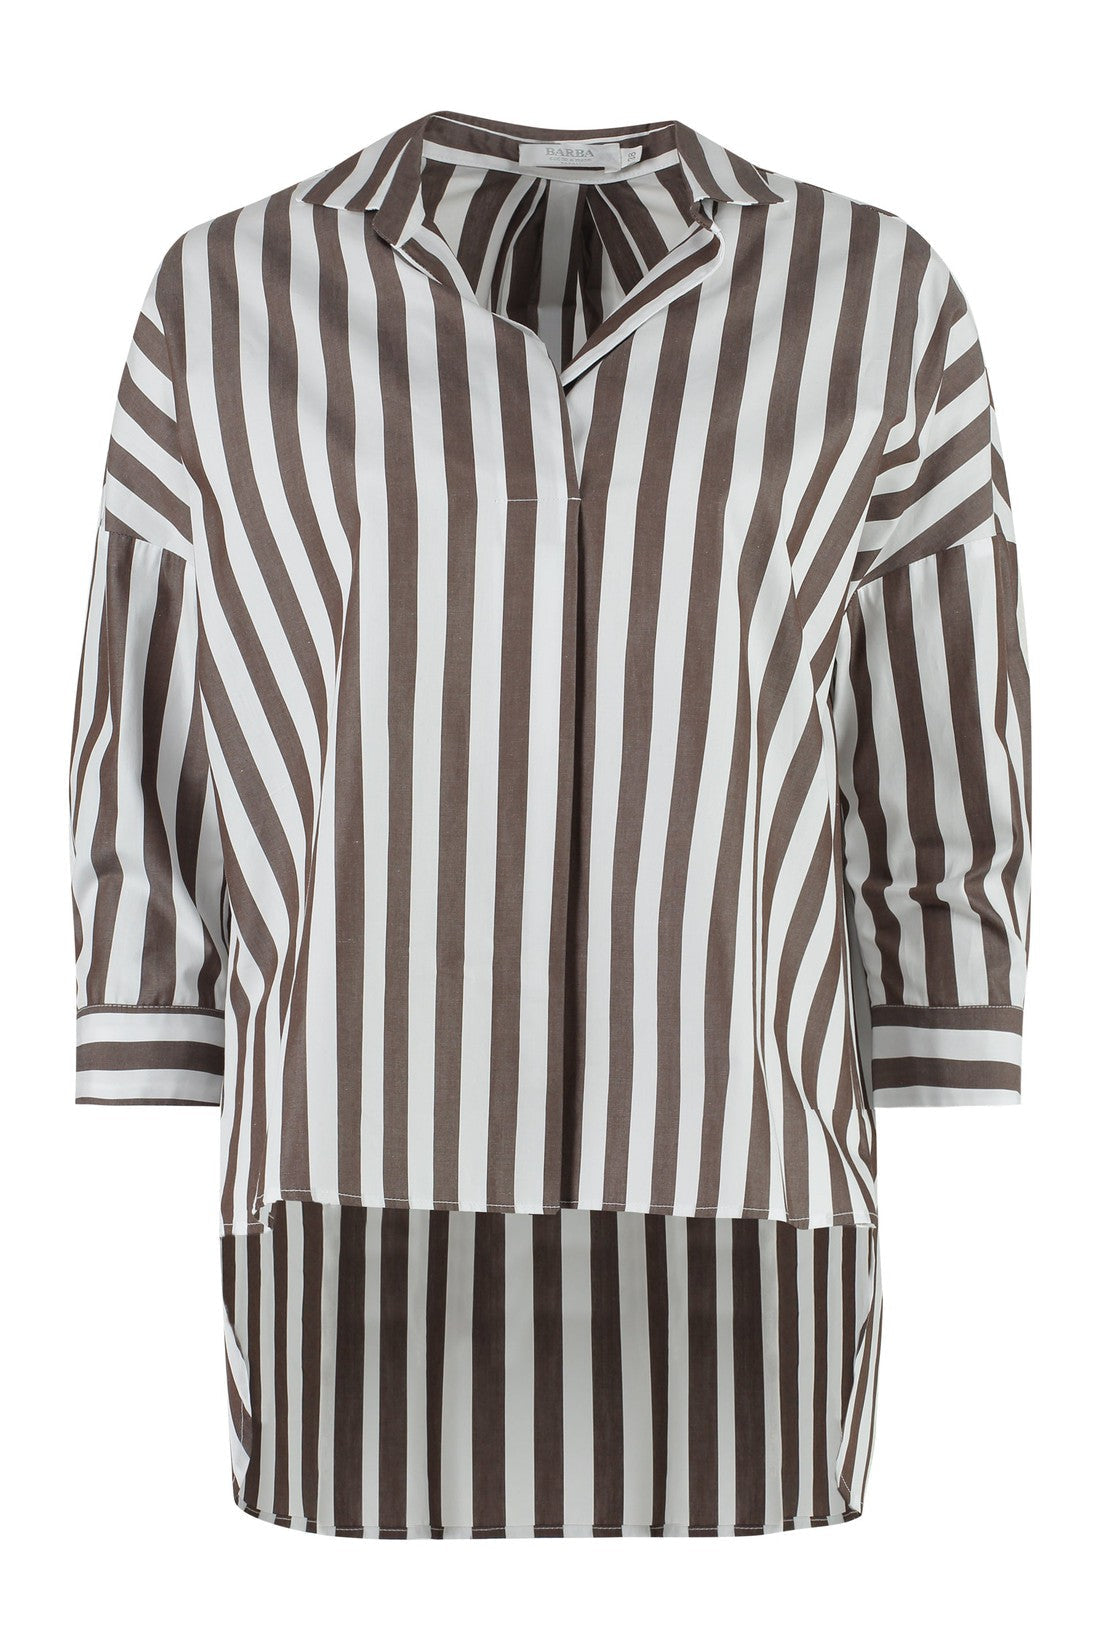 BARBA Napoli-OUTLET-SALE-Striped cotton shirt-ARCHIVIST